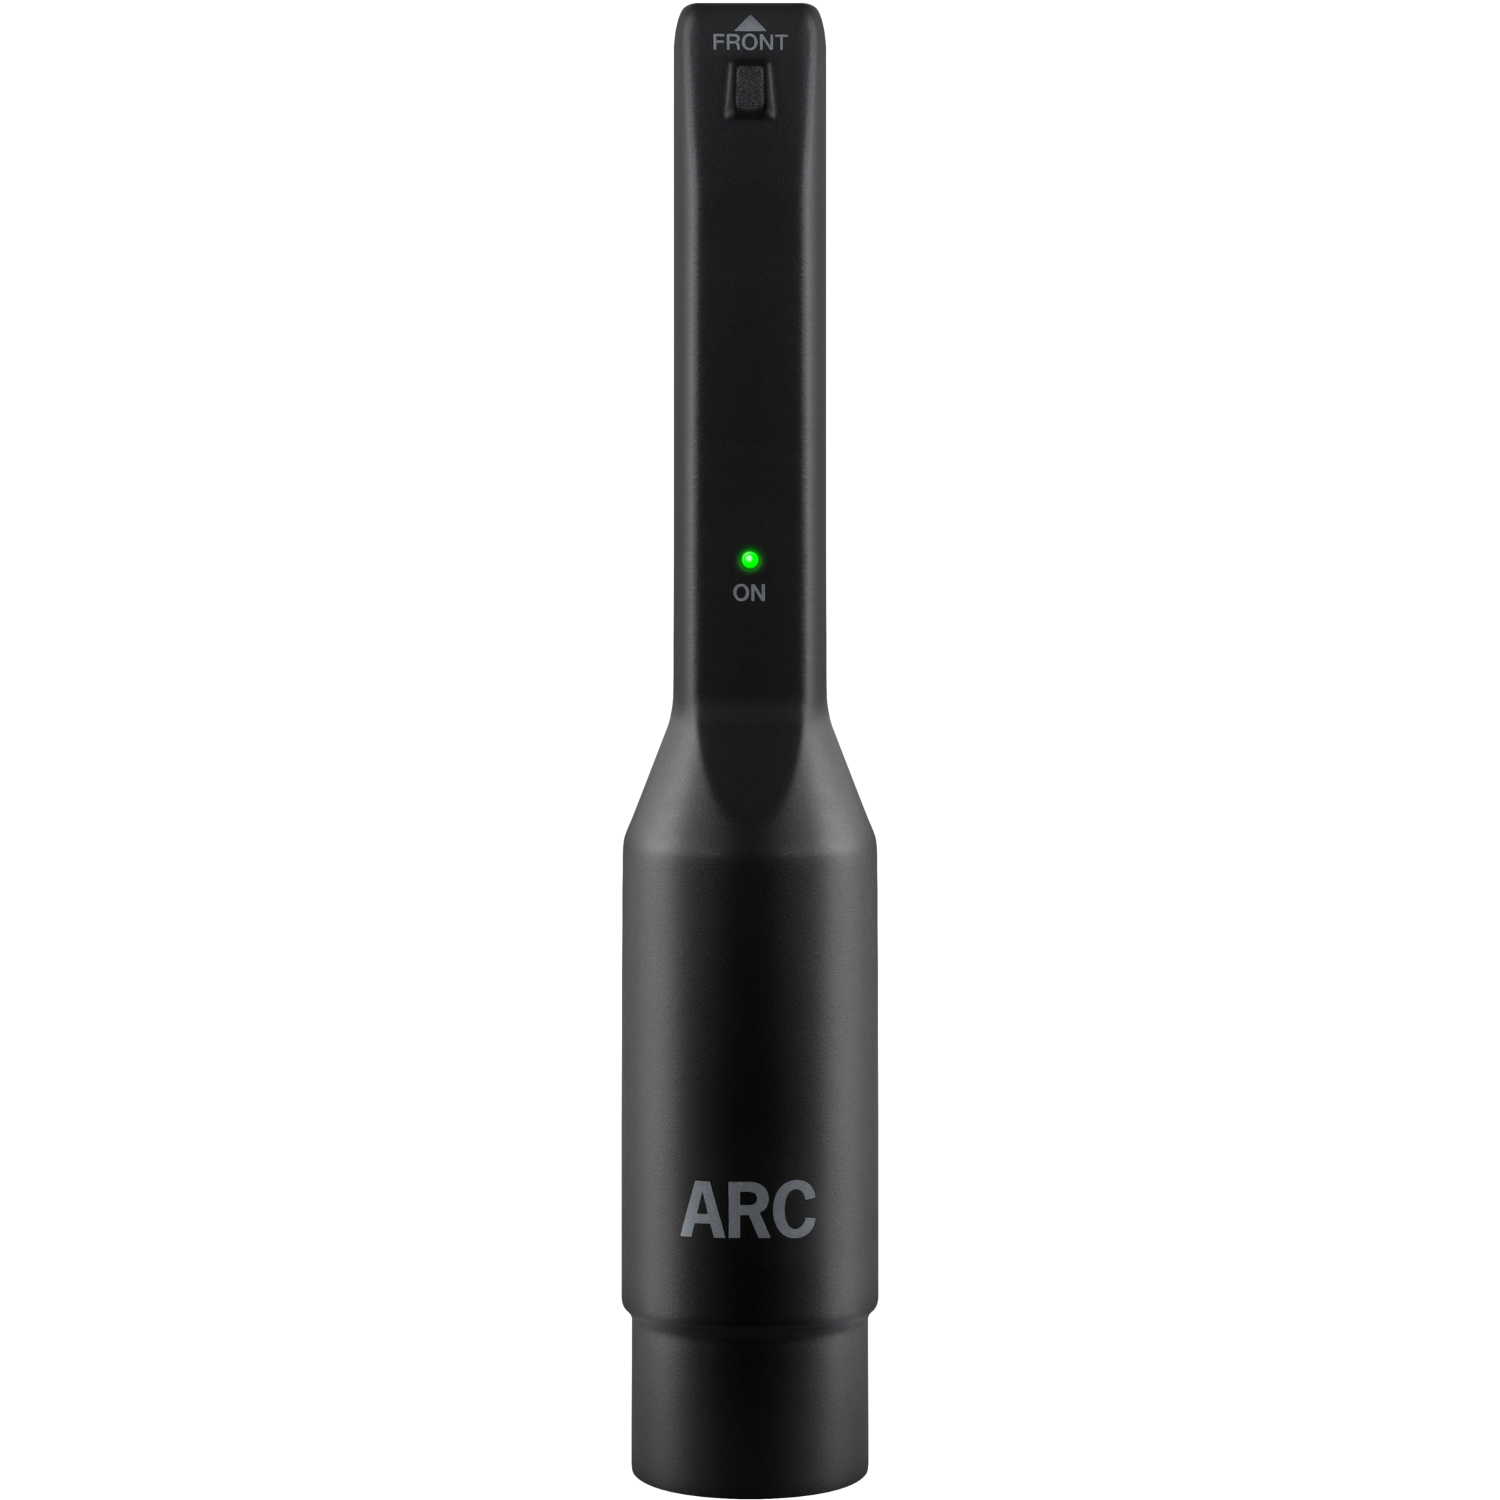 IK Multimedia MEMS microfoon voor ARC-systeem